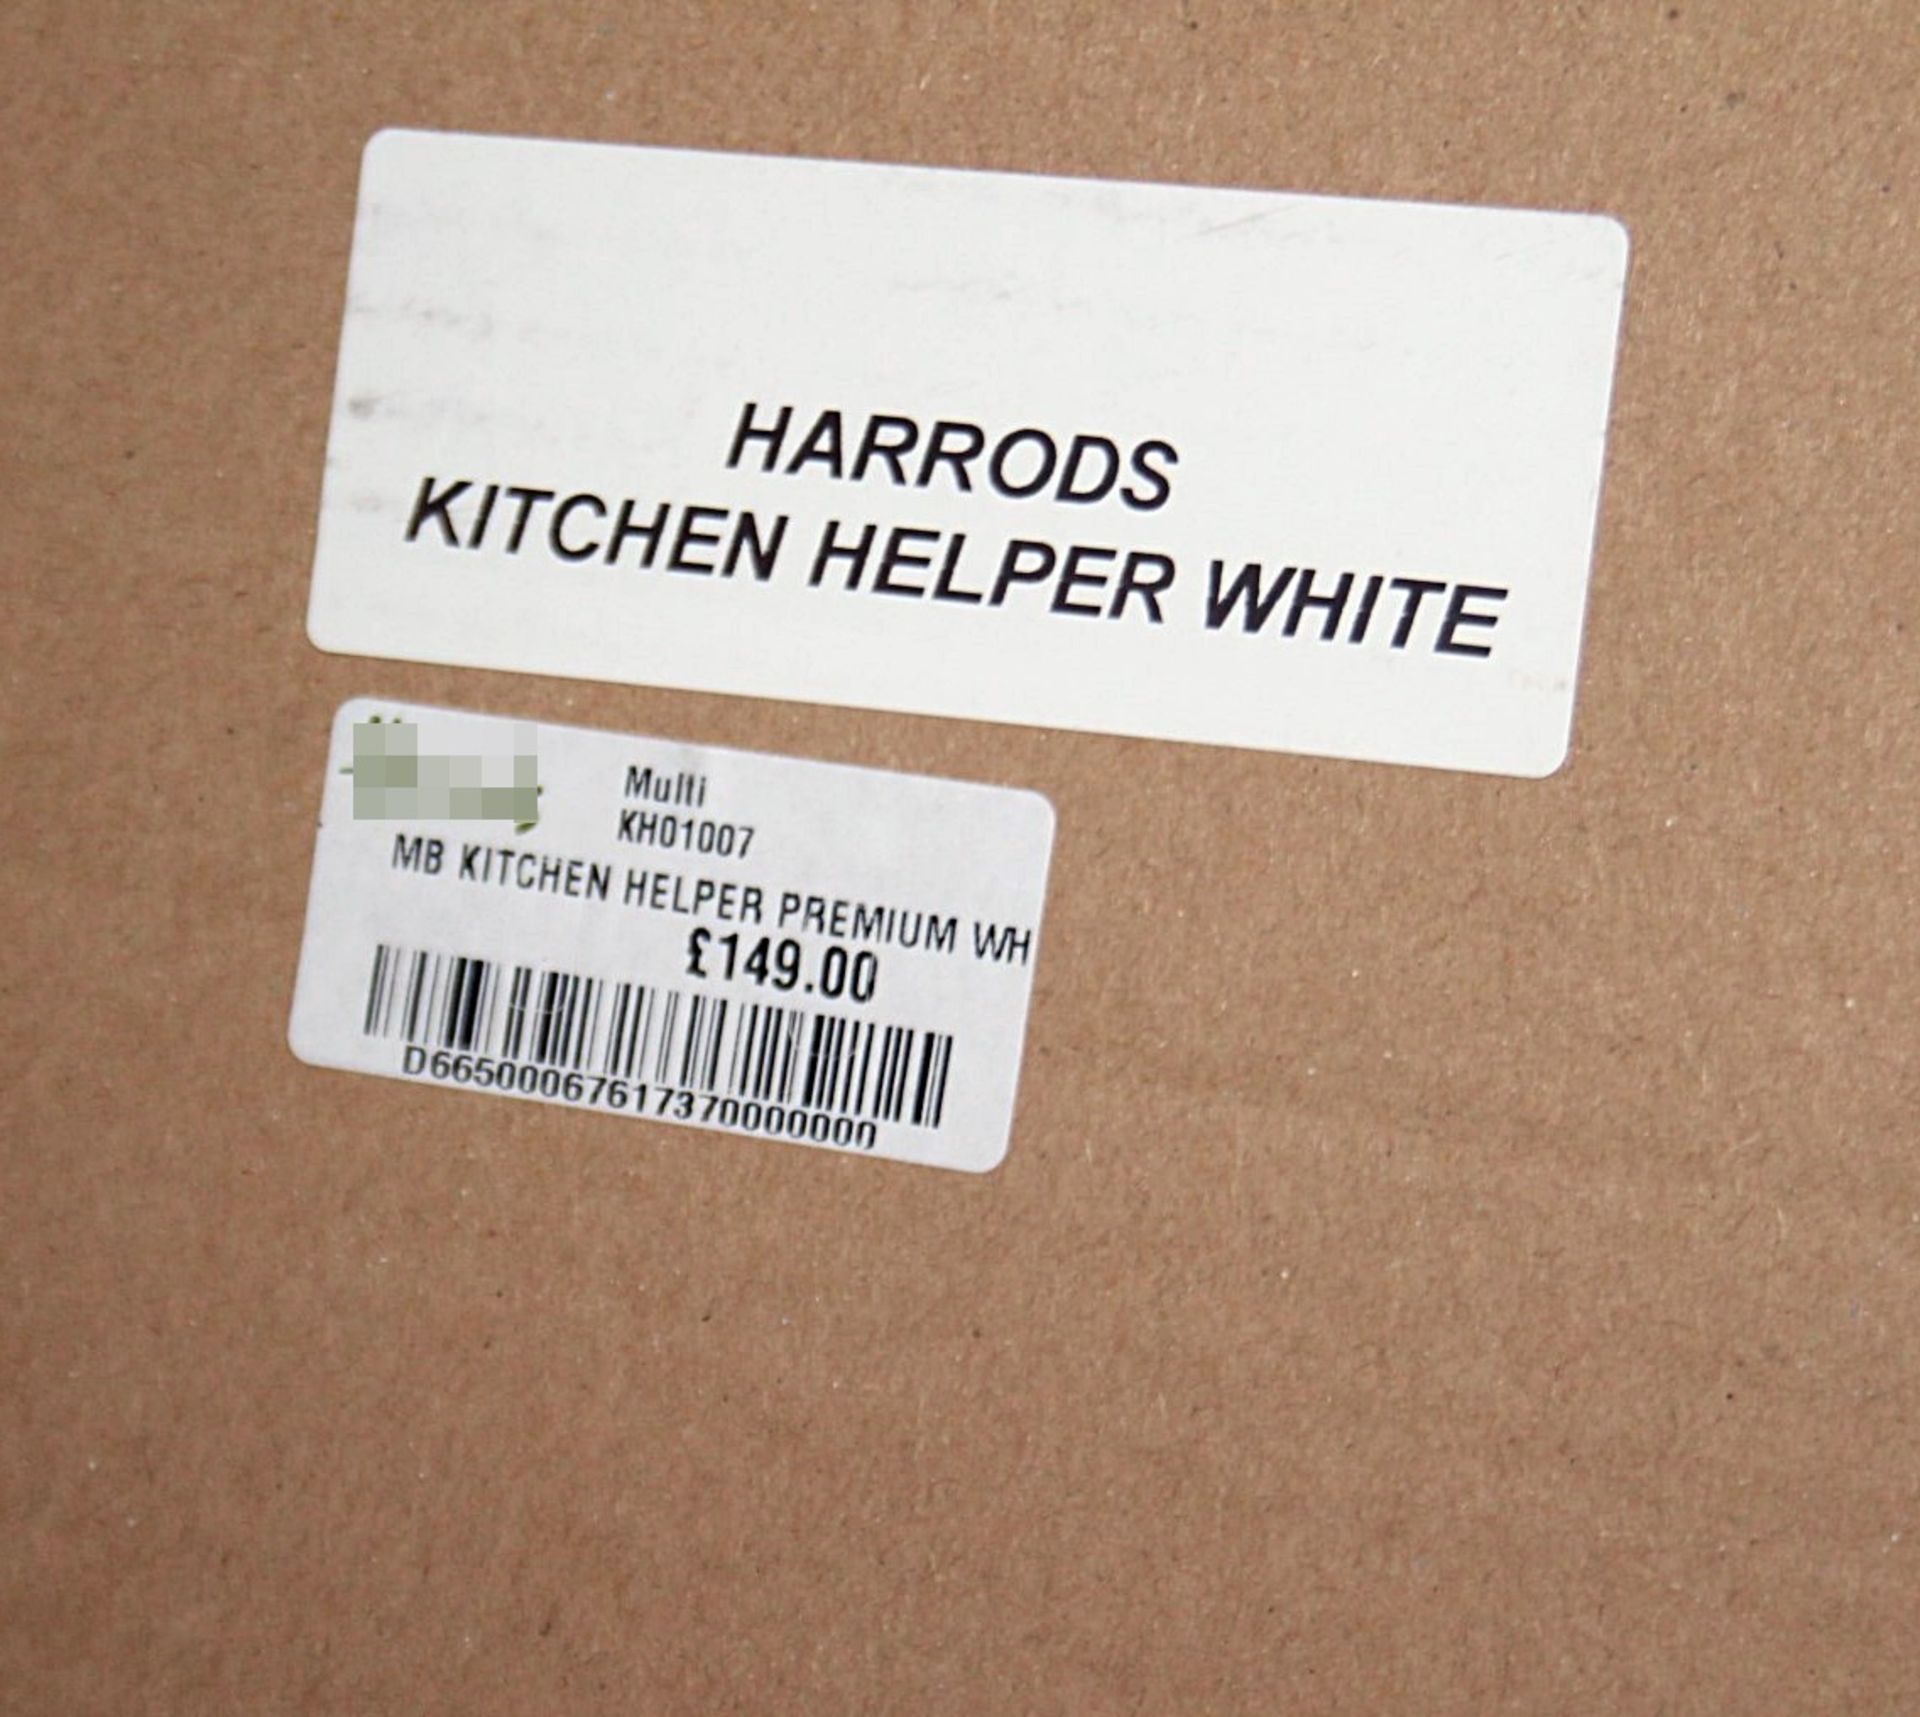 1 x MEOWBABY Kitchen Helper Premium - Dimensions: H90cm x W39cm x D52cm - Original Price £149.99 - Image 13 of 13